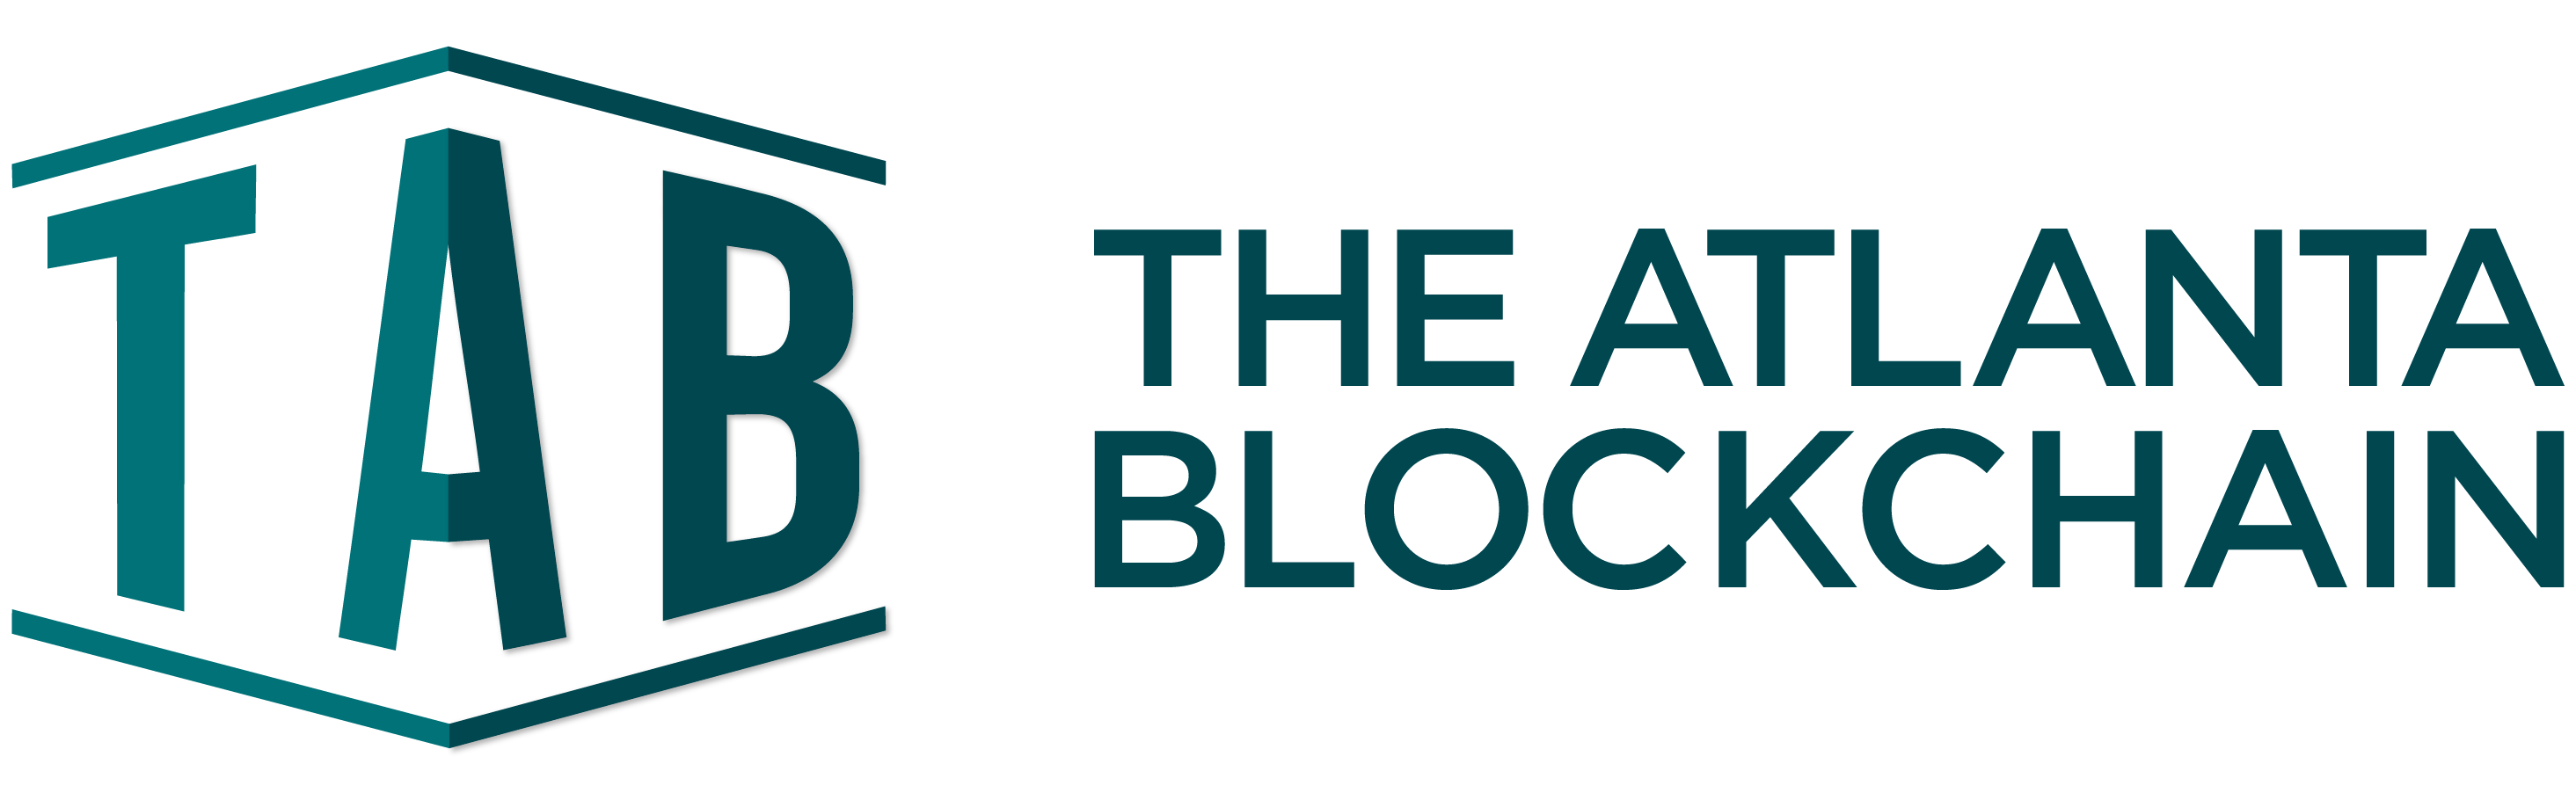 The Atlanta Blockchain